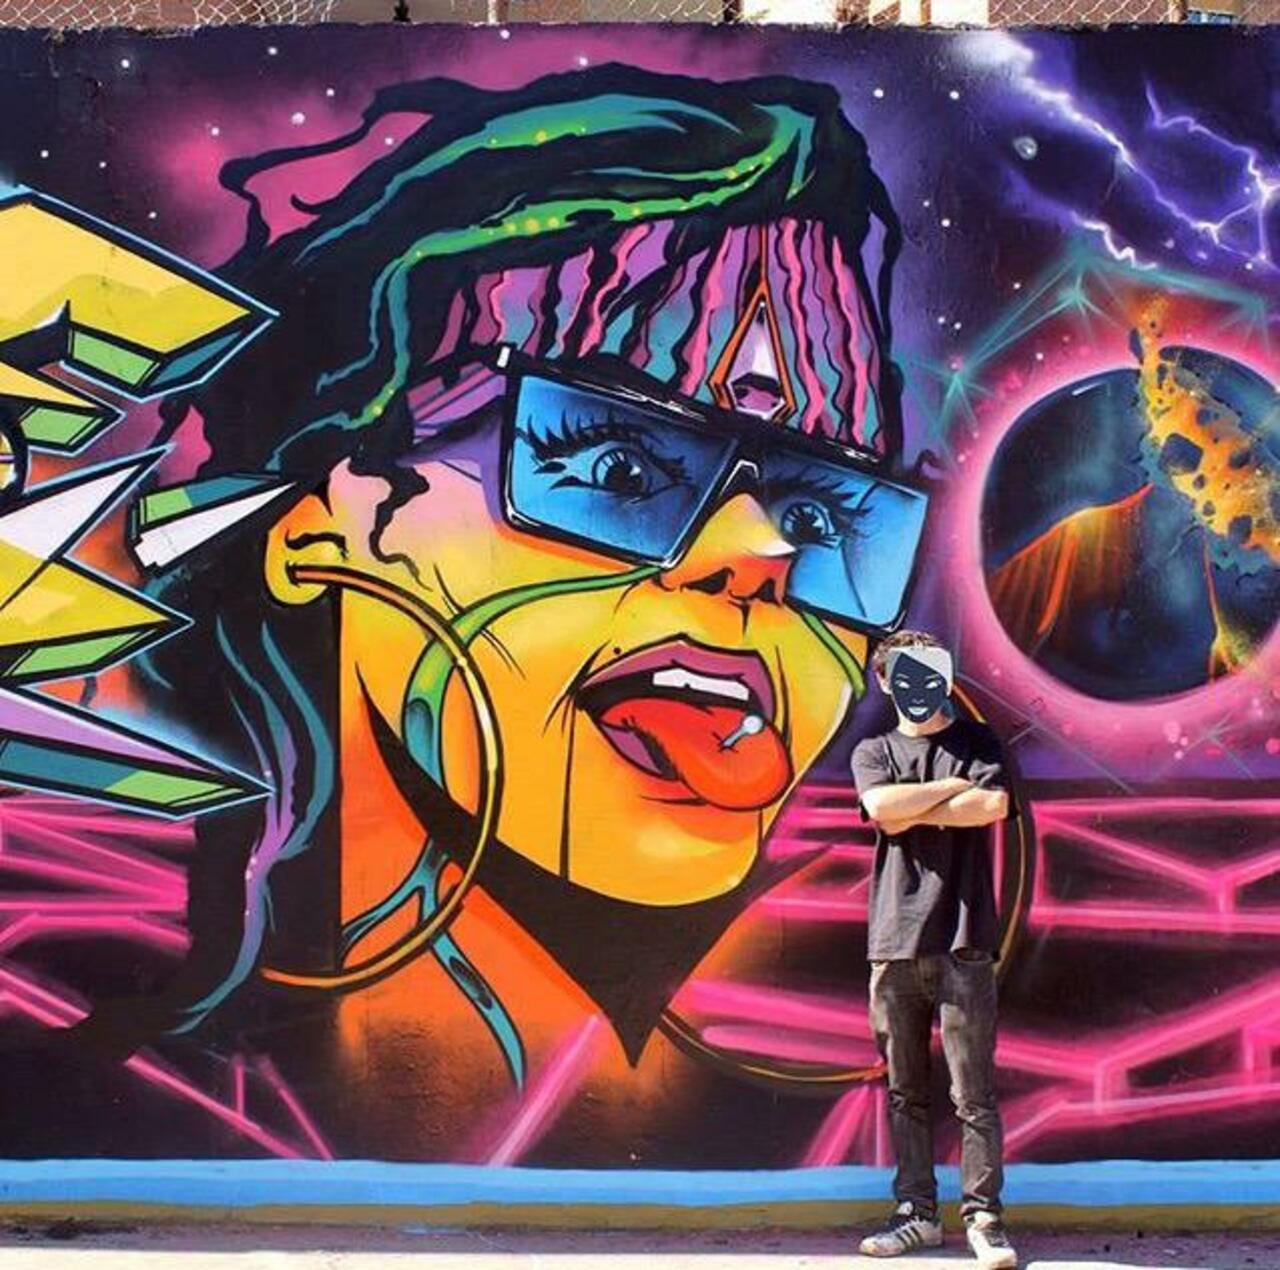 RT ArchaicManor "Brilliant new Street Art by the artist Jaycaes

#art #graffiti #mural #streetart http://t.co/Wg1IvTXqvP yo"